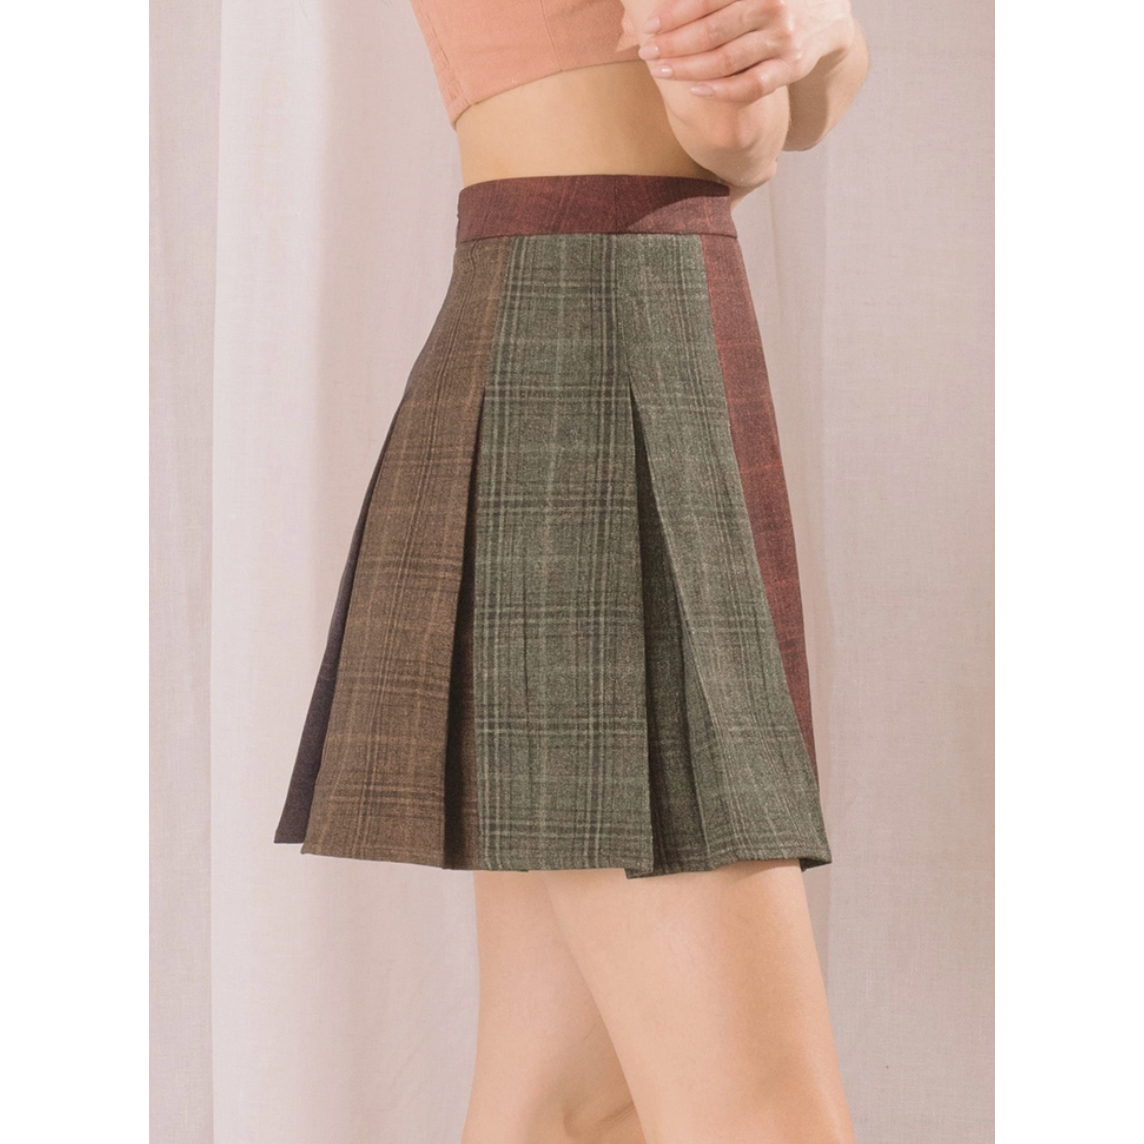 Color Block Plaid Tennis Skirt